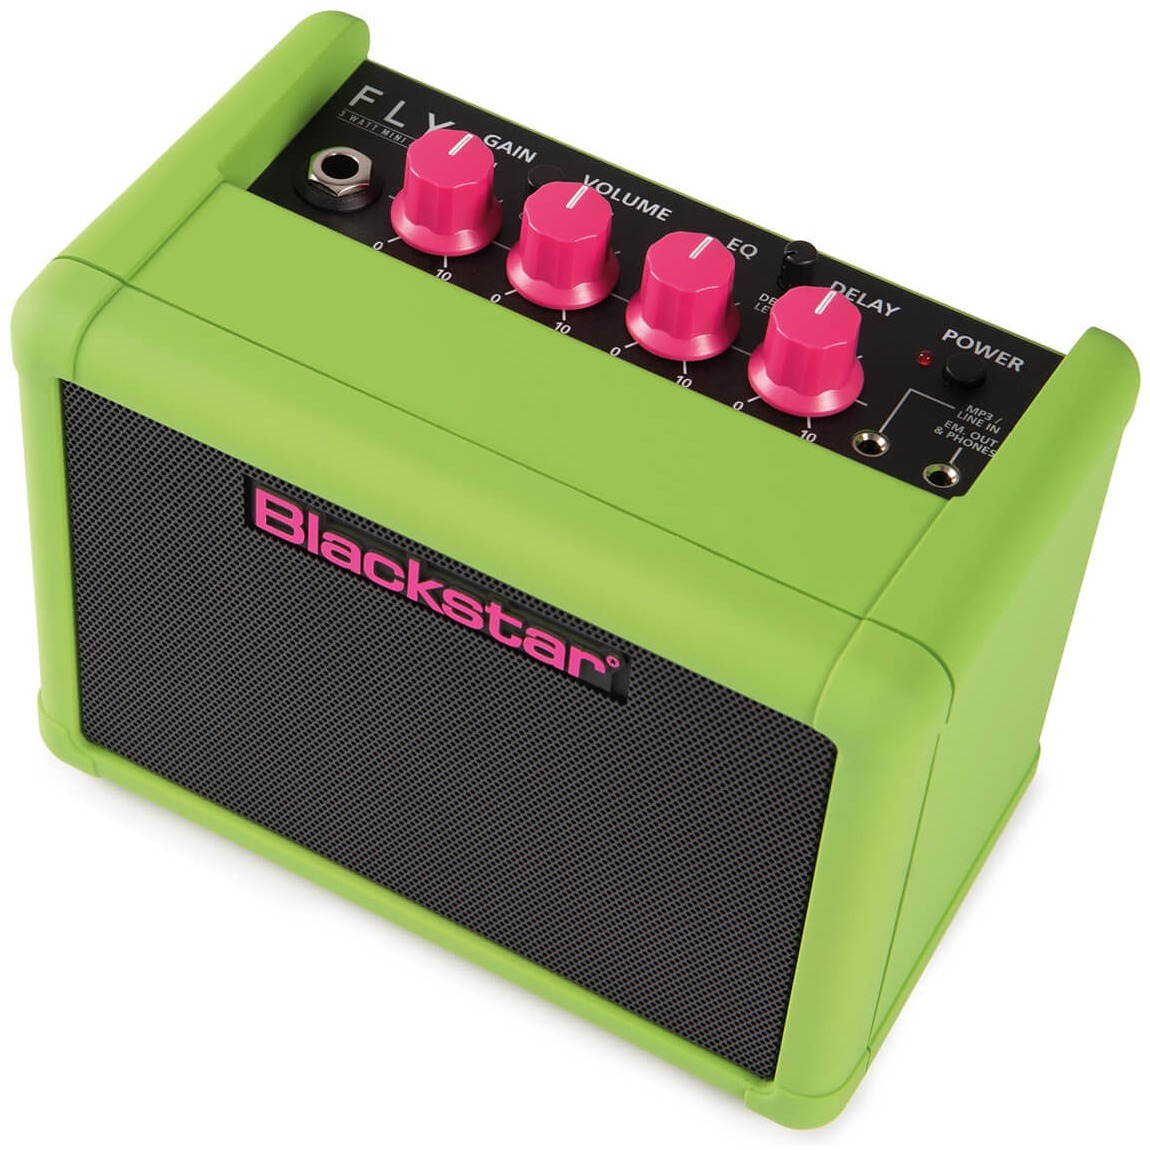 Blackstar Fly3 Bass Neon Green  мини комбо для бас-гитары 3Вт, 2 канала, цвет зеленый